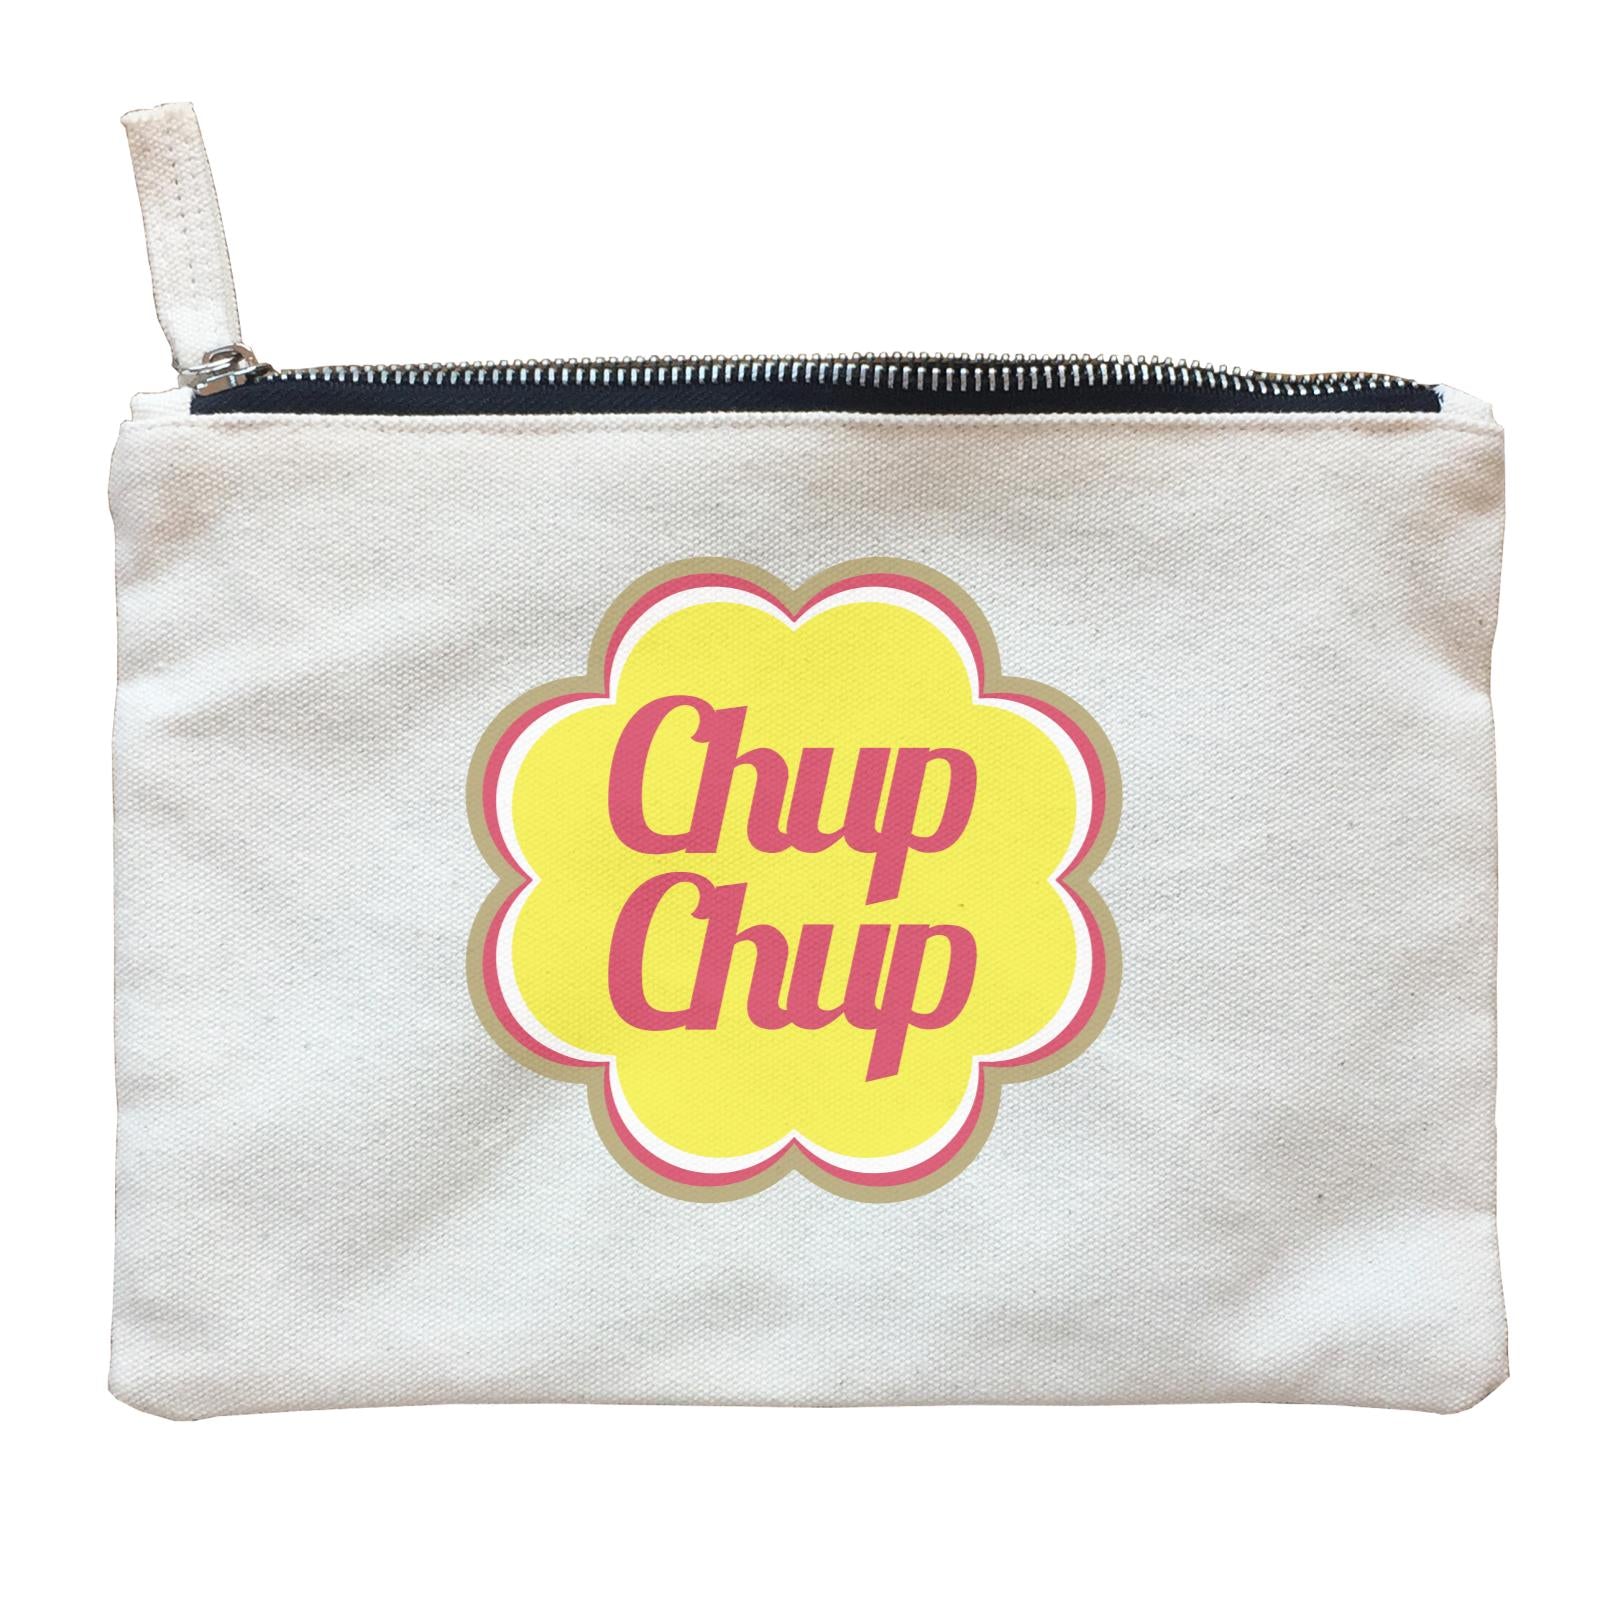 Slang Statement Chup Chup Accessories  Zipper Pouch